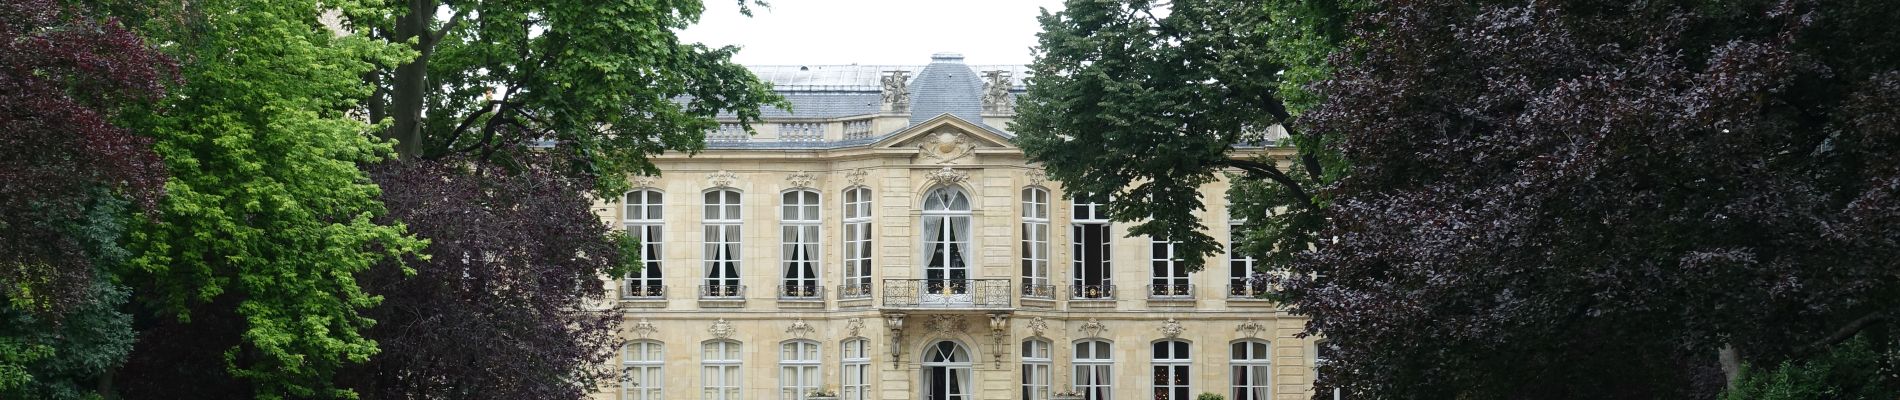 POI Paris - Hotel de Matignon (premier ministre) - Photo